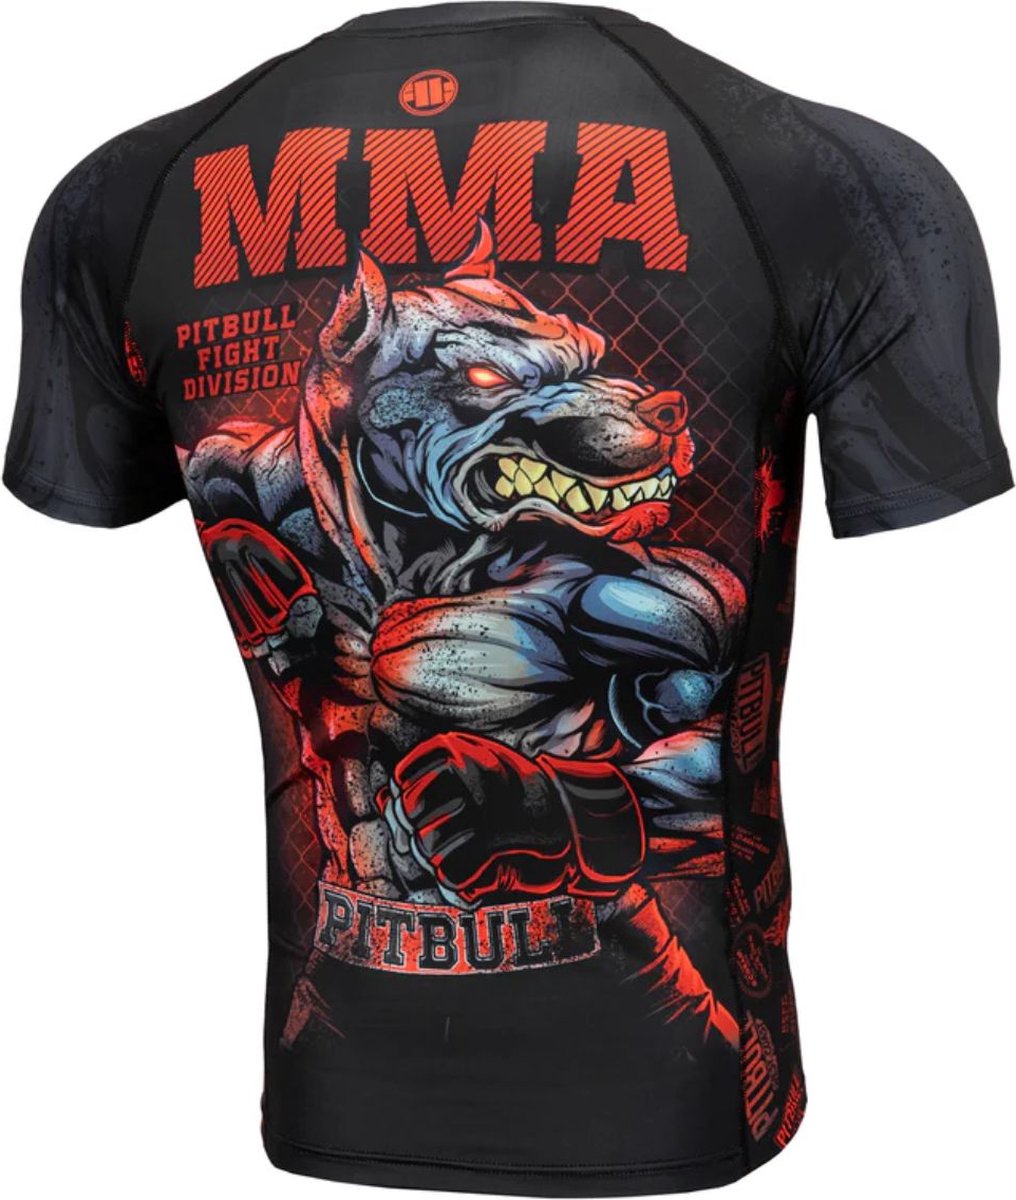 Pit Bull - Master of MMA - Rashguard Short Sleeve - Compressie shirt - Zwaart/ Rood - Maat XL